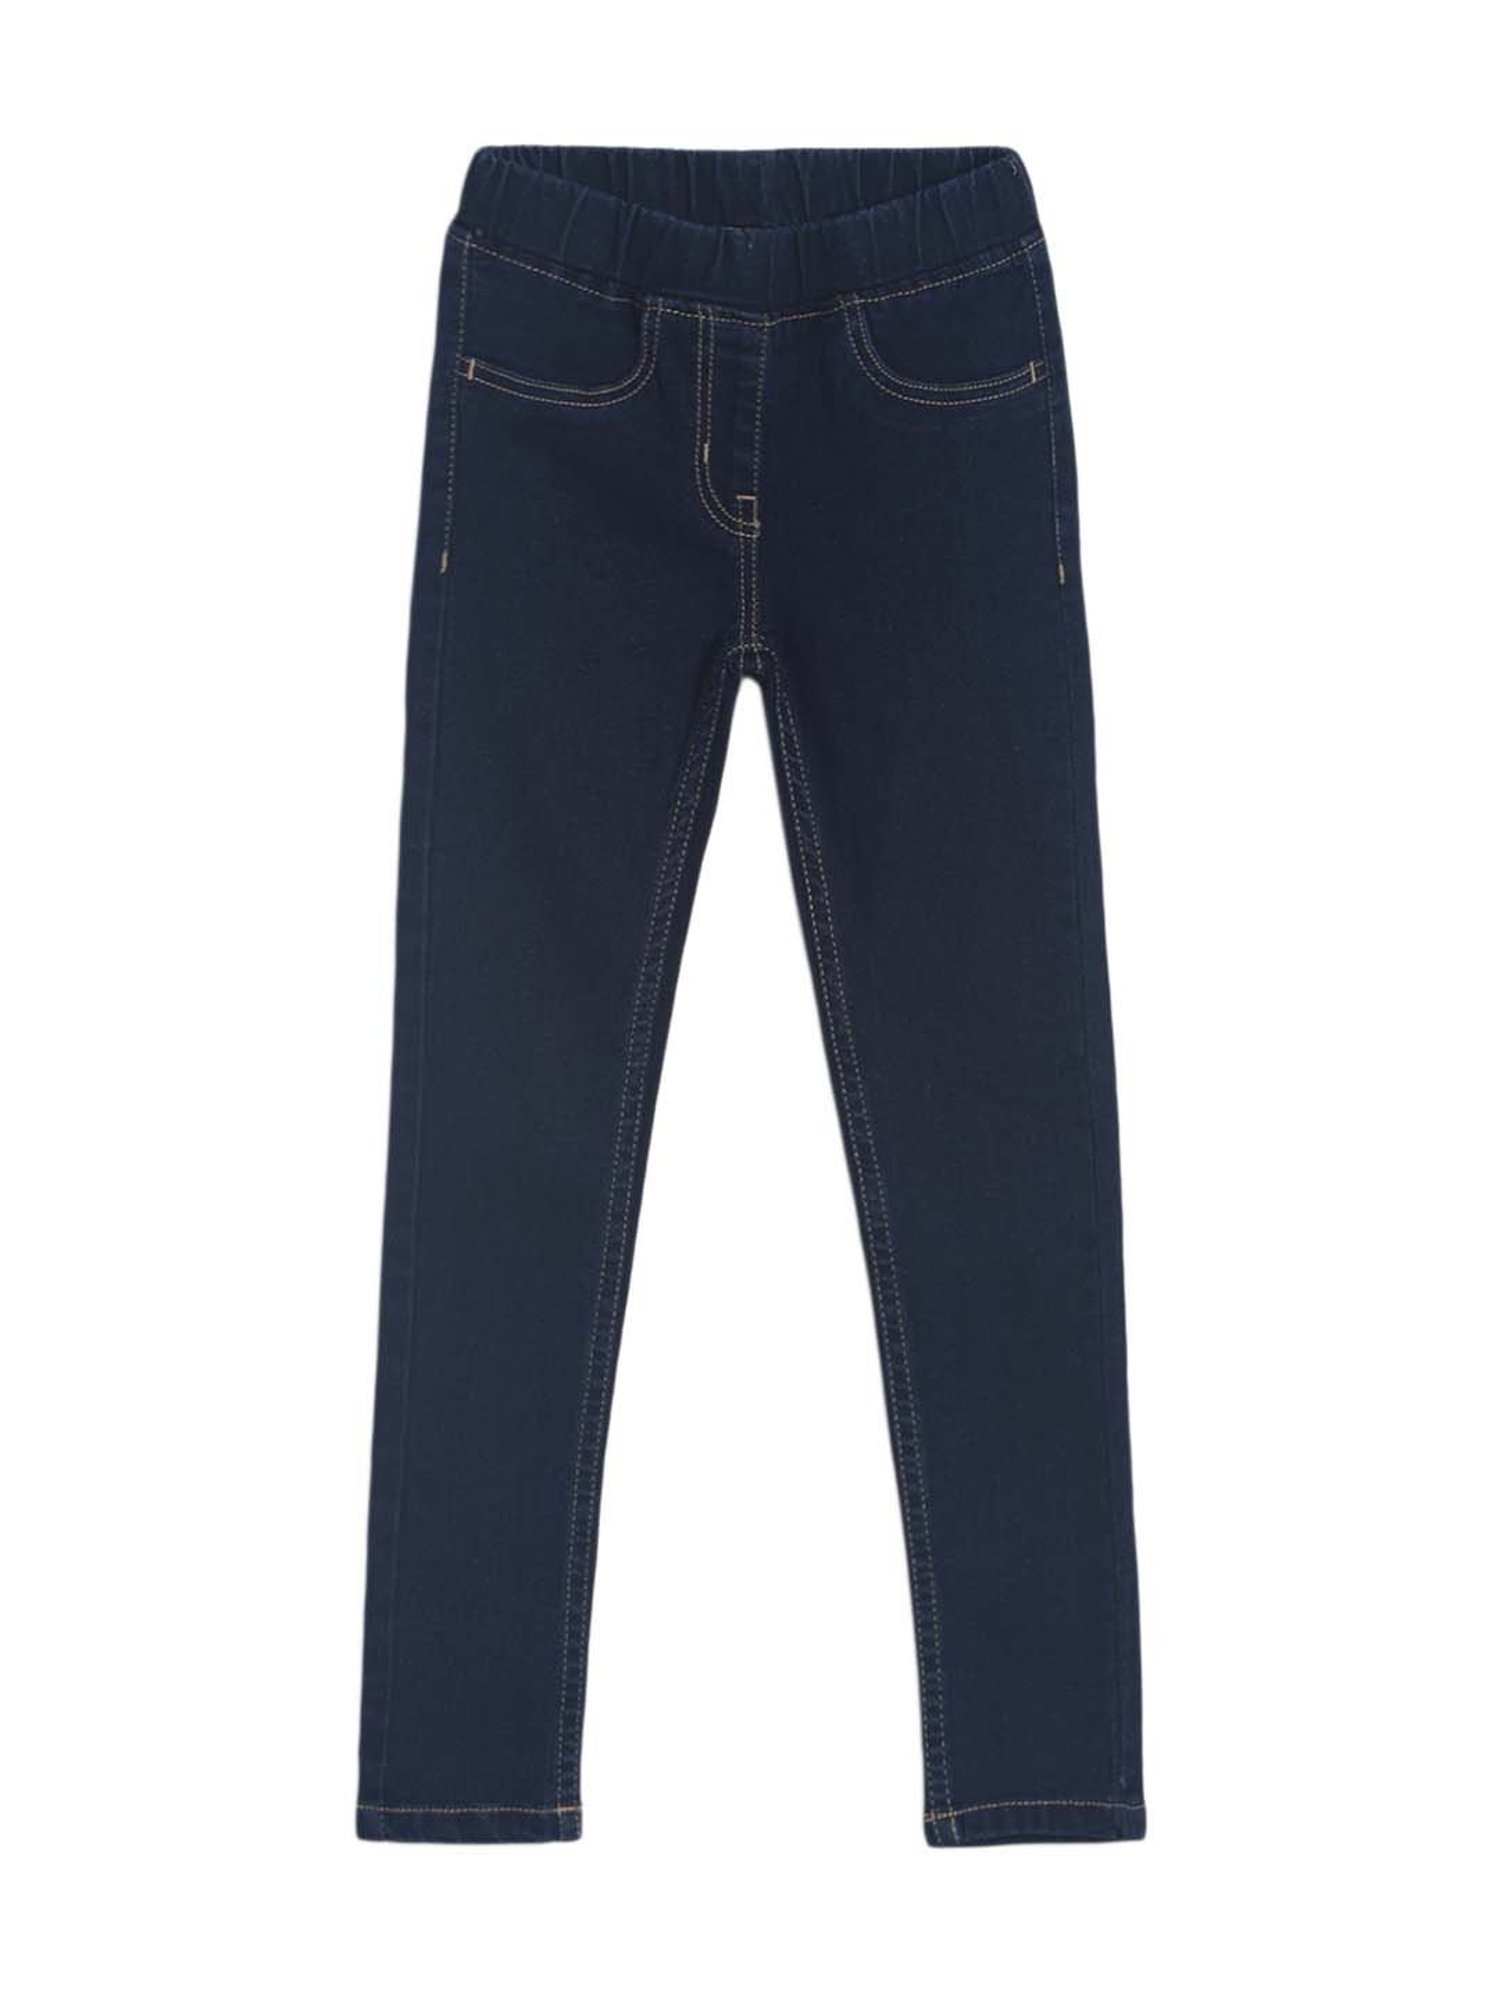 Kids Girls Stretchy Denim Jeans Jeggings Pants Leggings Trousers 5-13 Years  | eBay